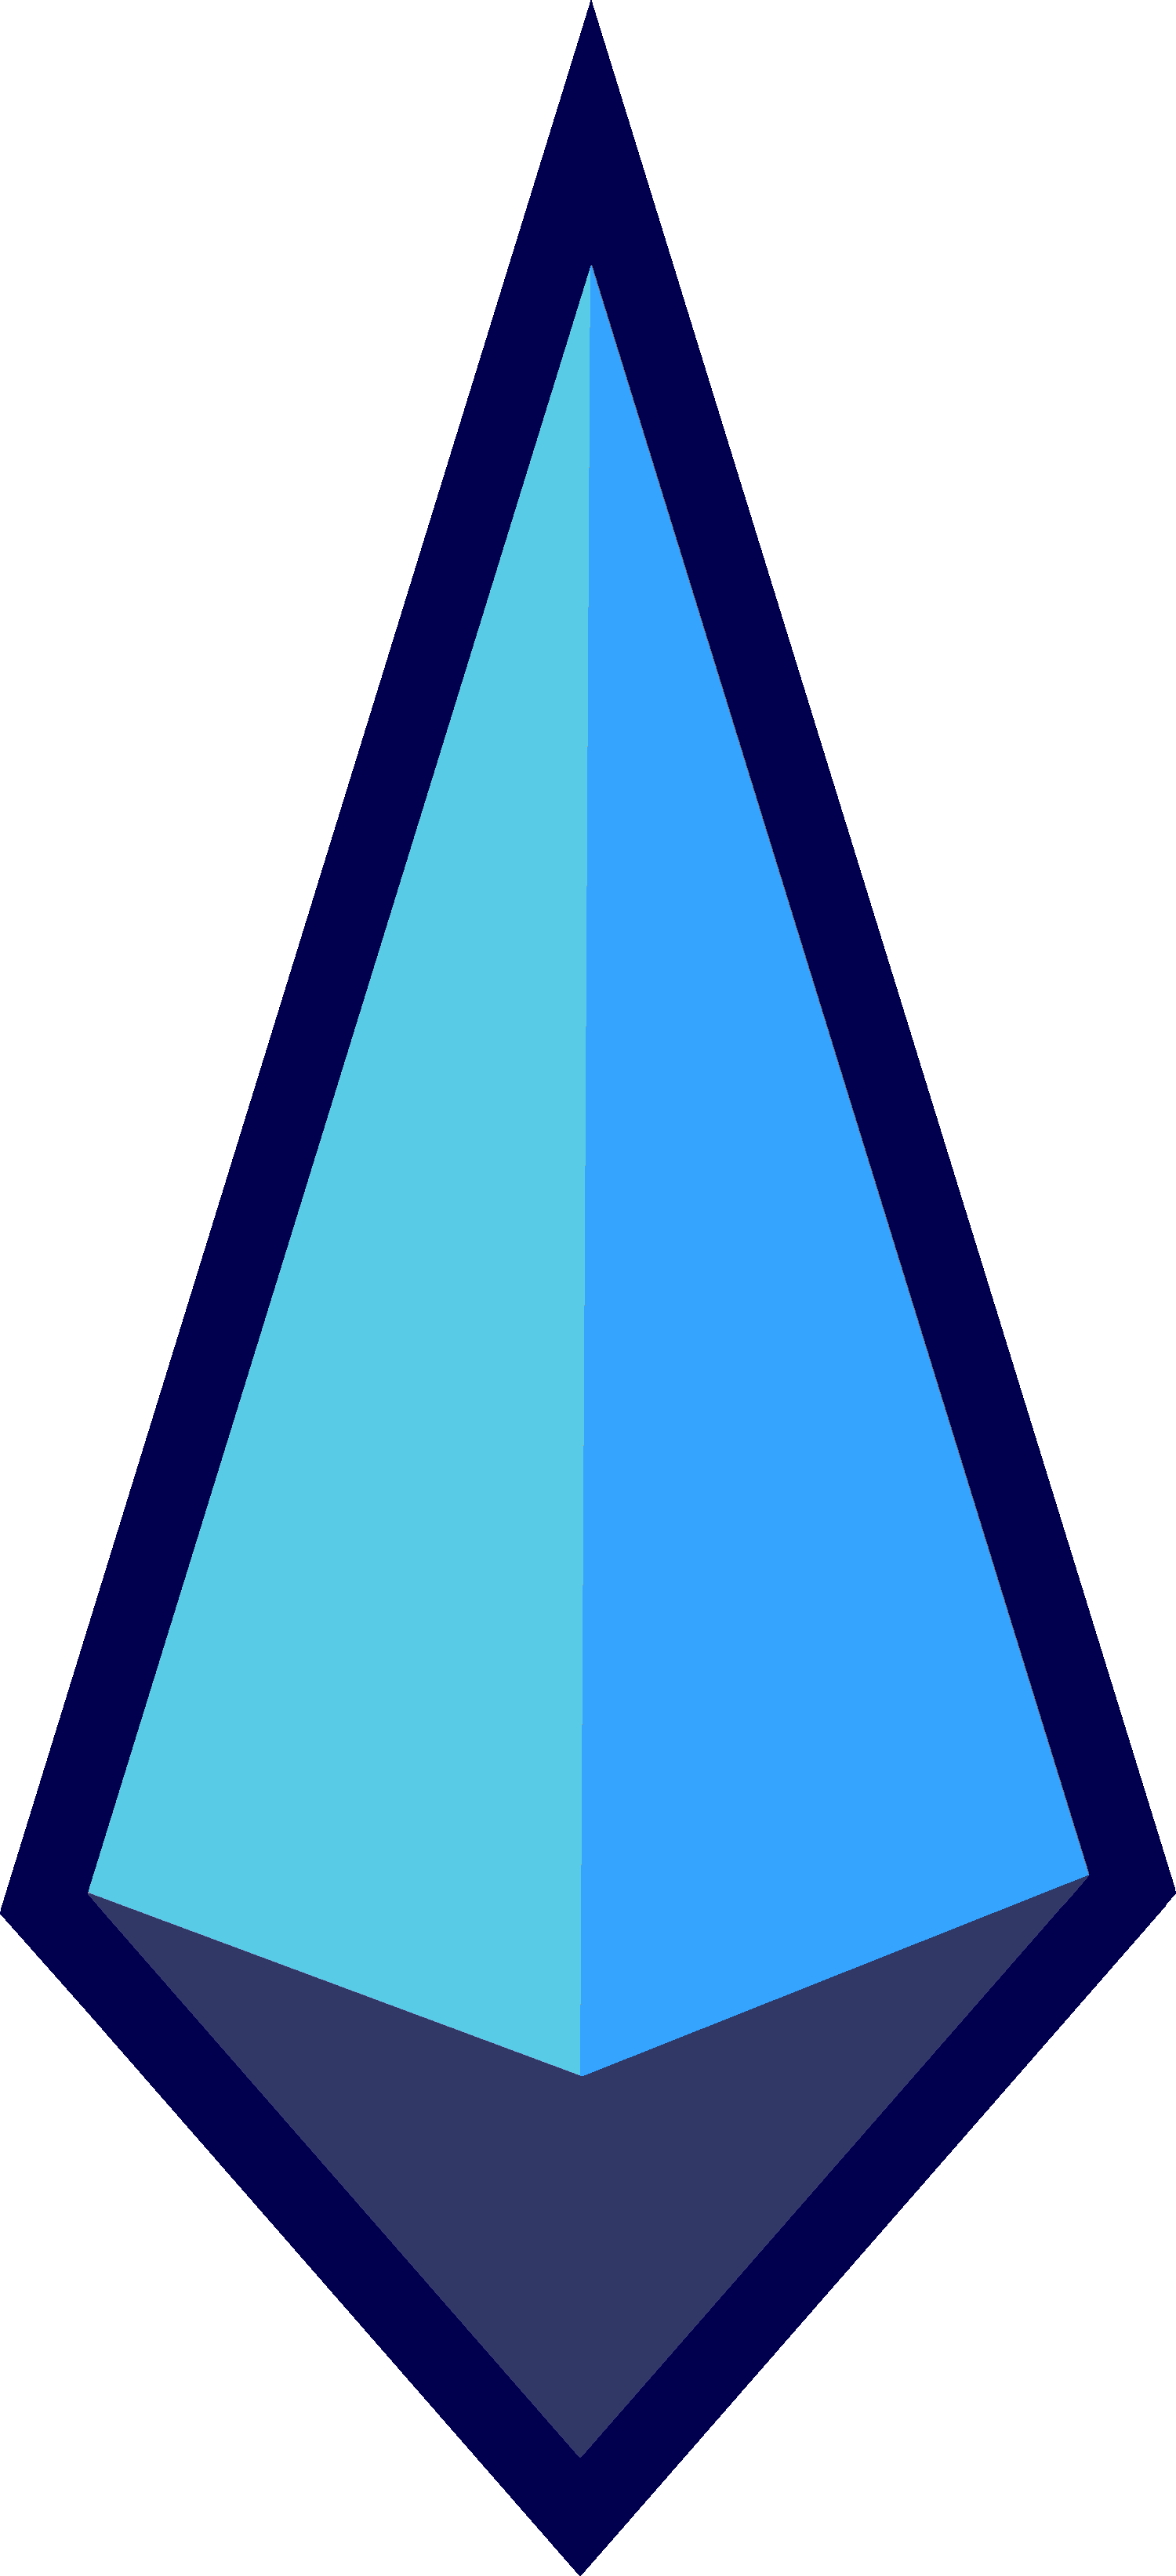 triangular clipart navy blue